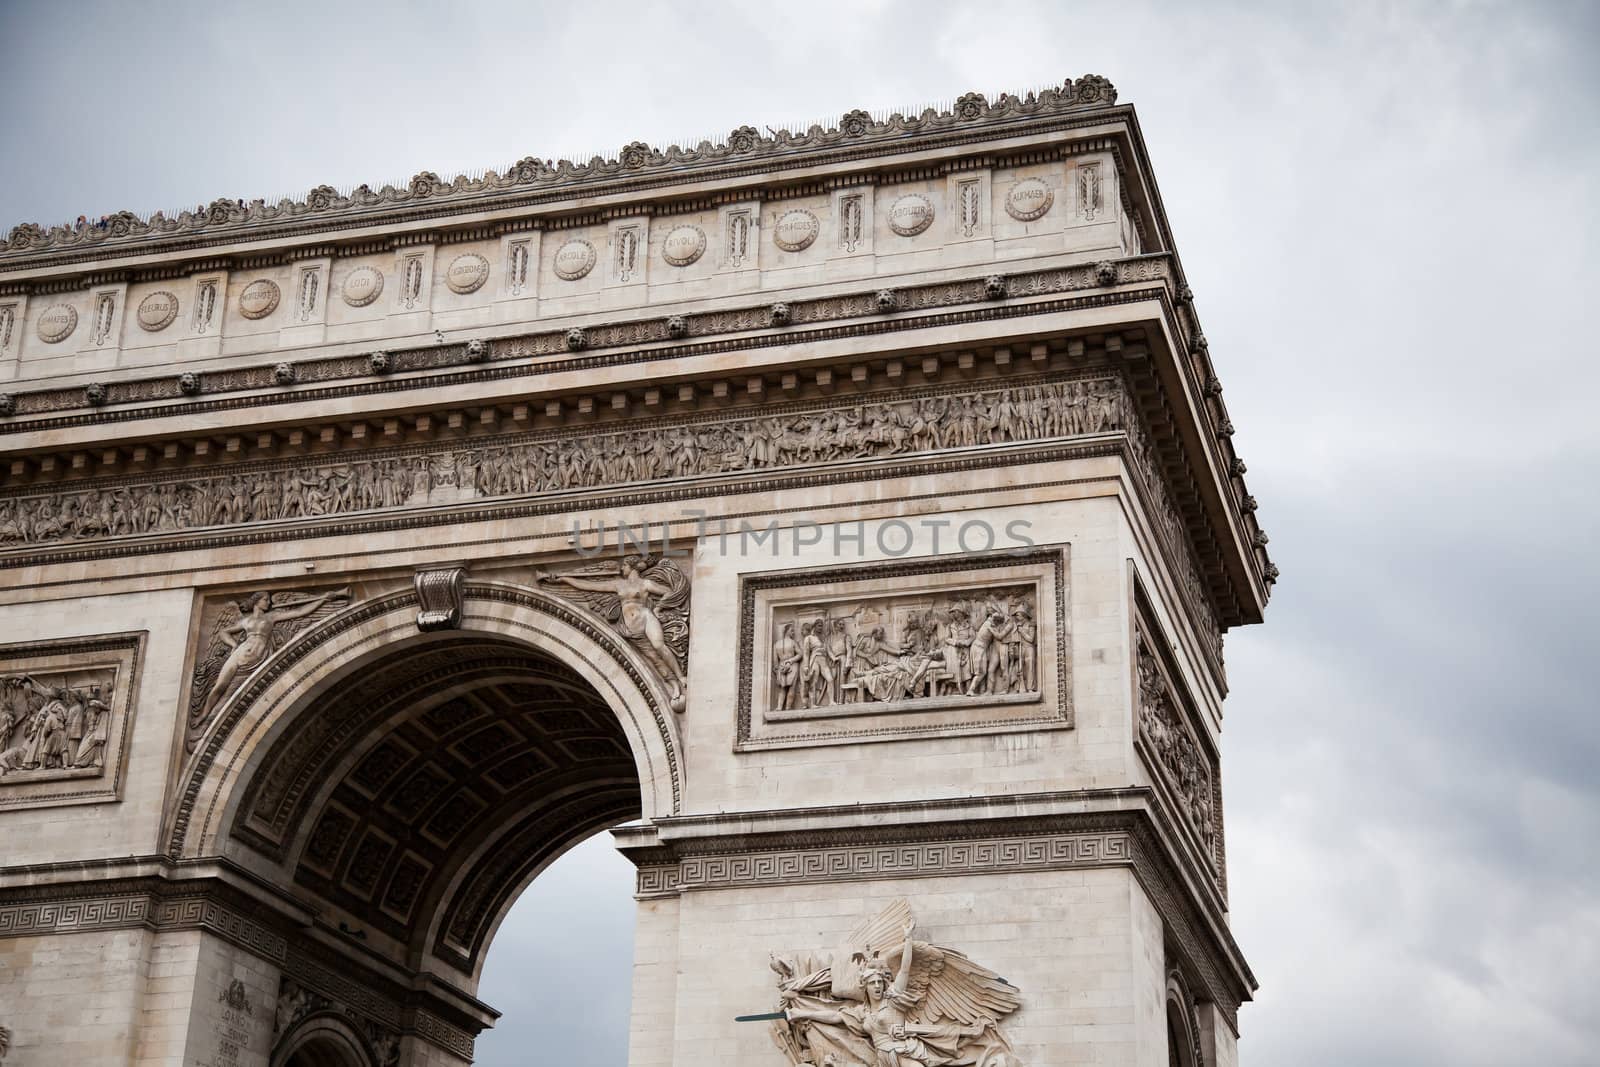 Arc de Triomphe (Arch of Triumph) on gloomy sky background